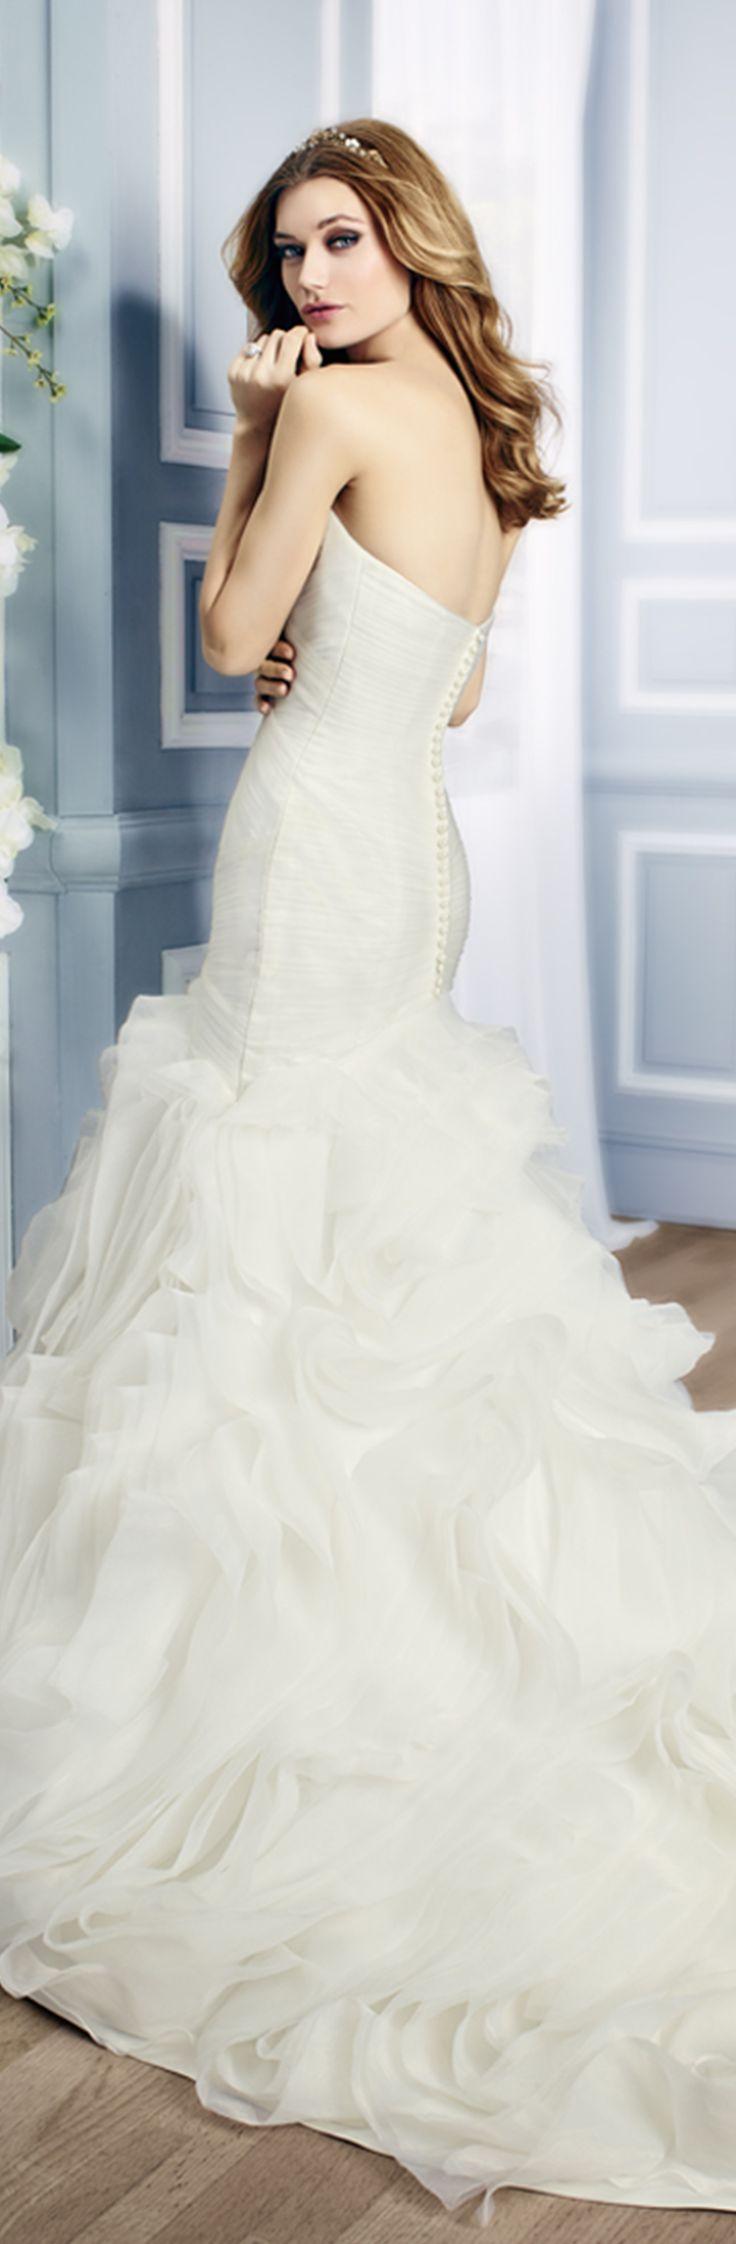 Wedding - Glamourous Drop Waist Wedding Dress With Ruffled Skirt 